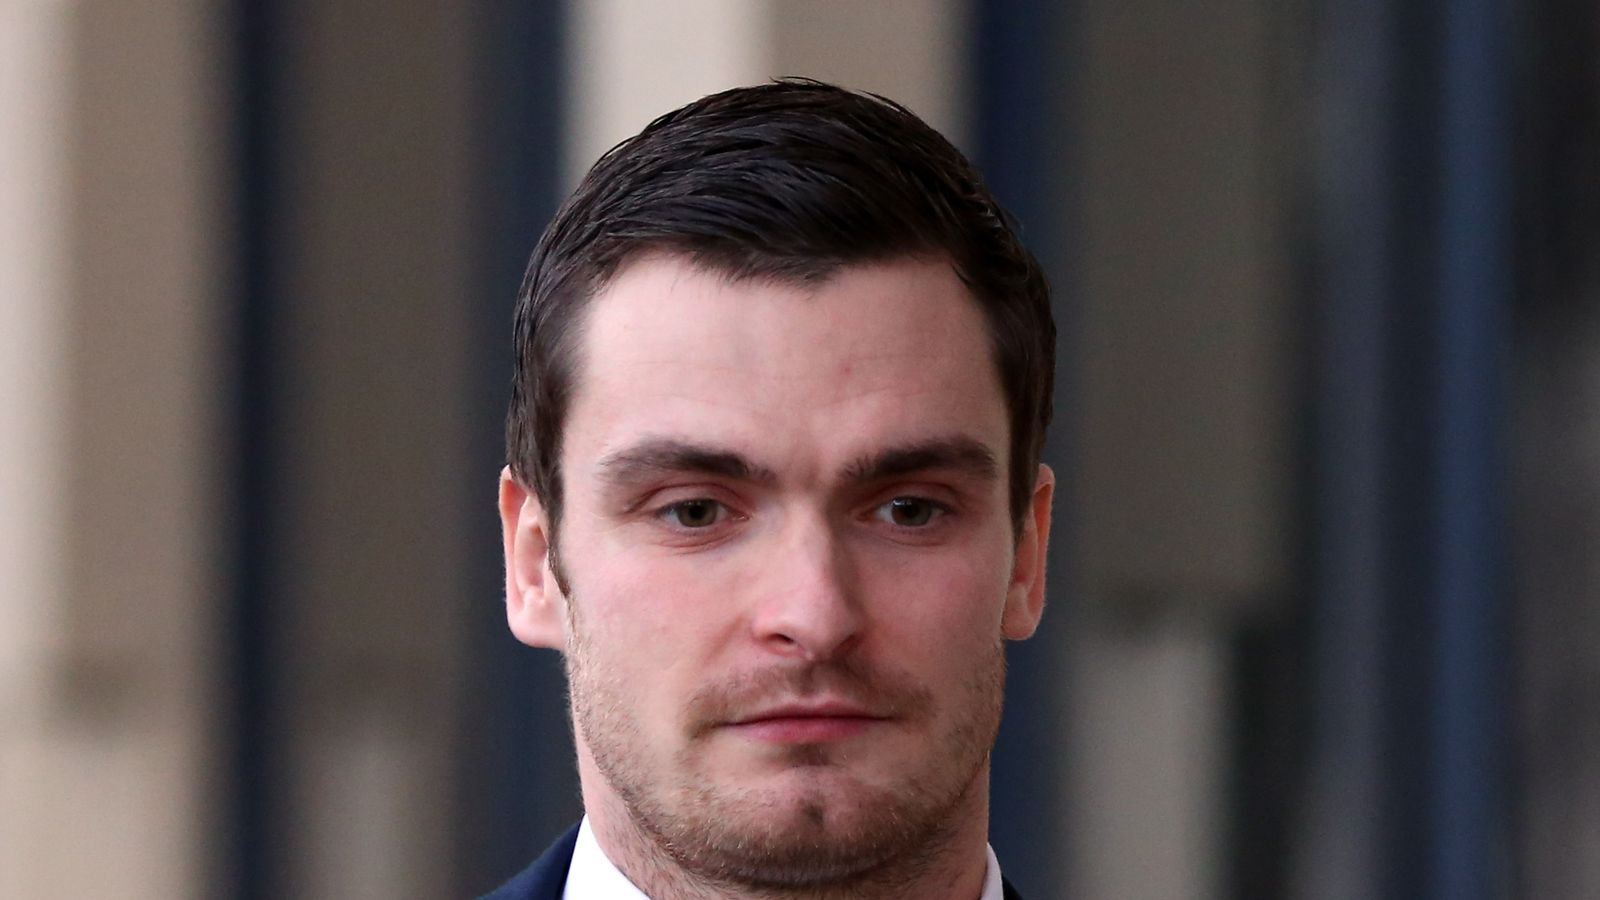 Inquiry into prison video of exfootballer Adam Johnson